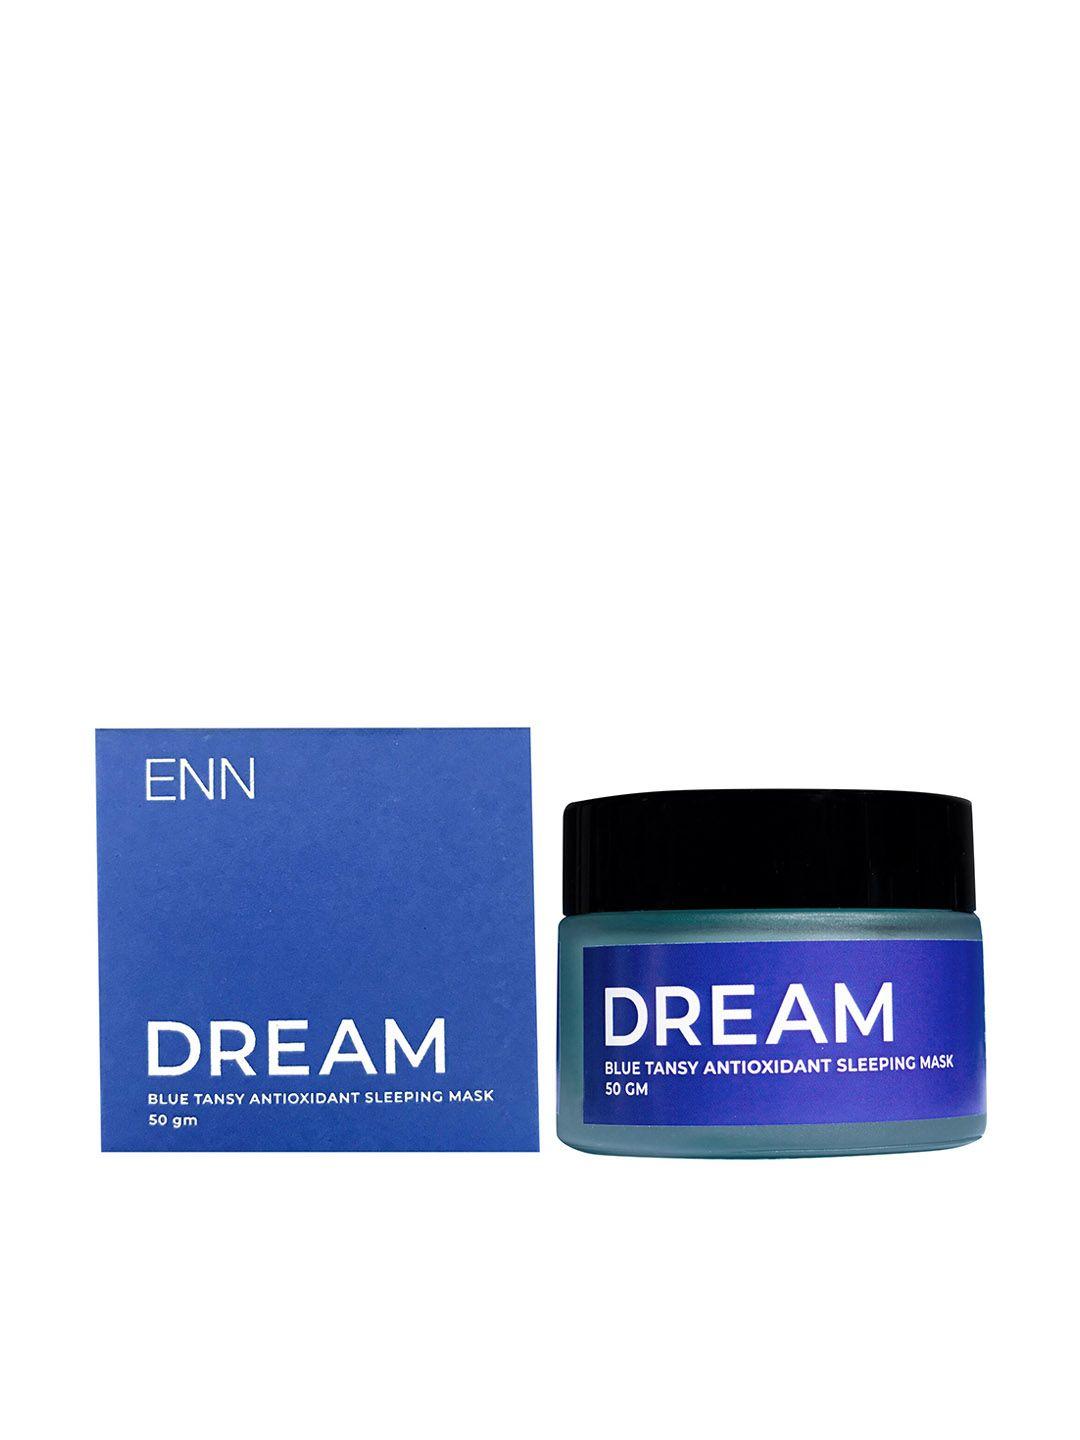 enn dream blue tansy antioxidant sleeping mask - 50 g